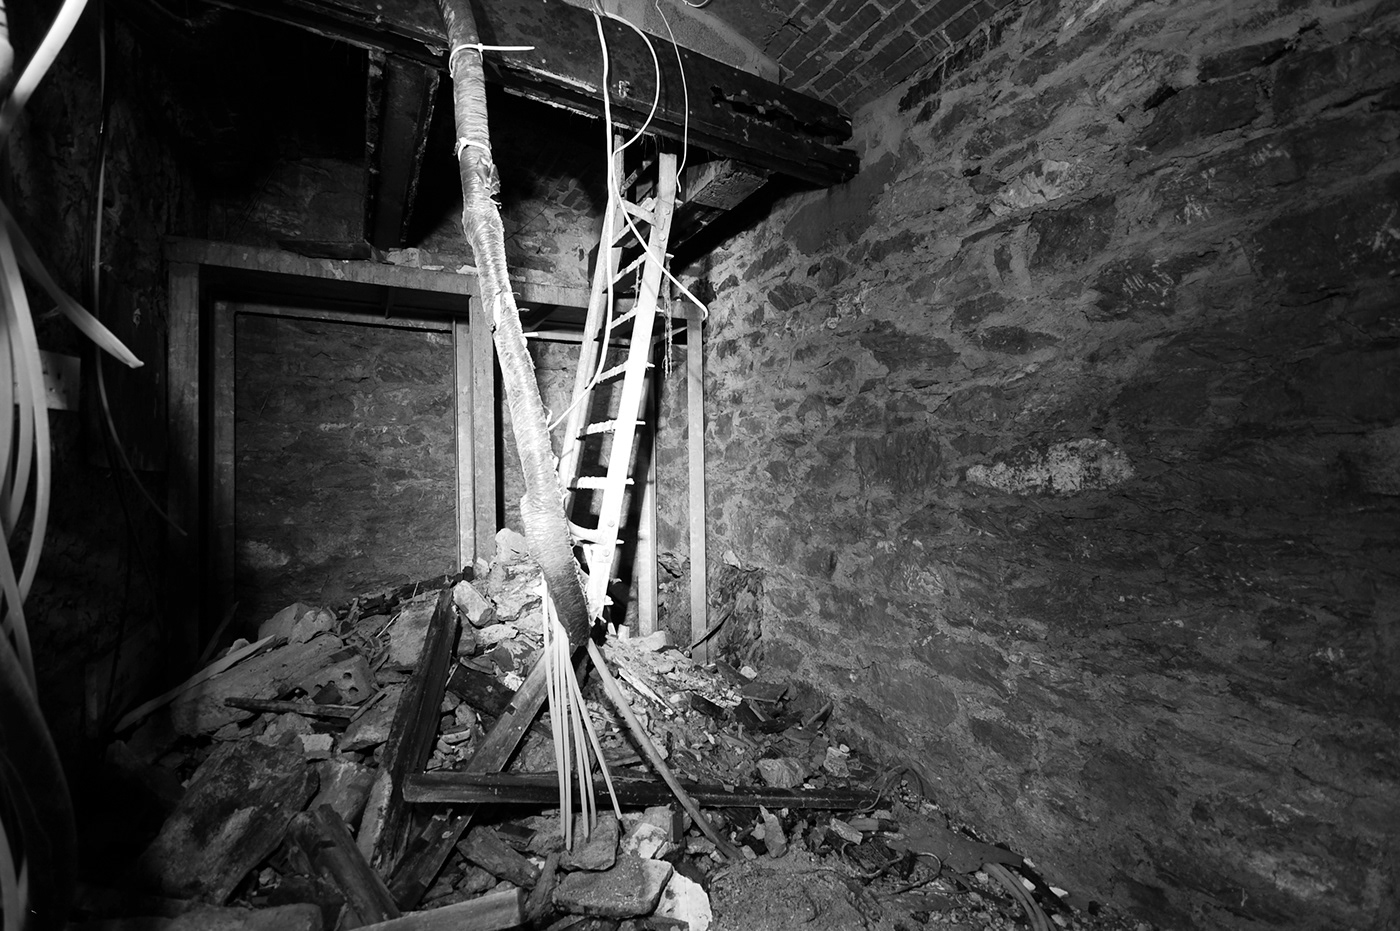 abandoned abandoned places buildings decay derelict exploration forgotten urban exploration urbex urbex photography